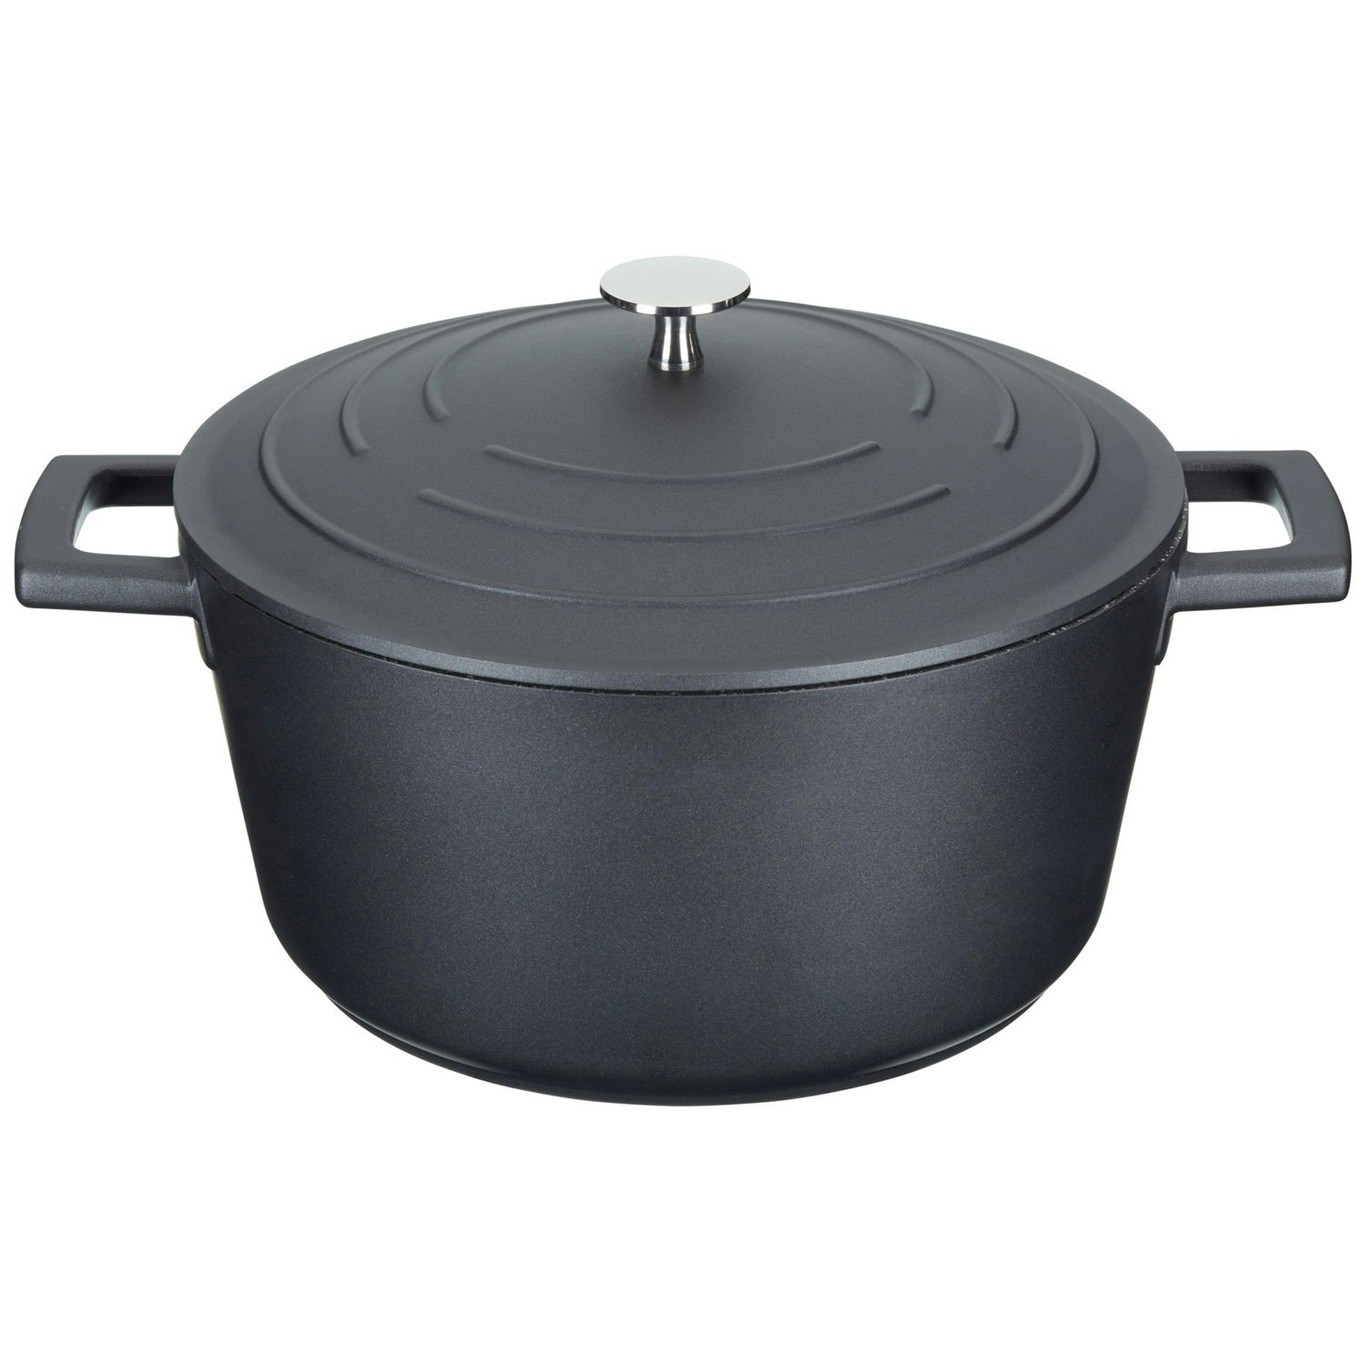 https://royaldesign.com/image/2/kitchen-craft-masterclass-casserole-black-7?w=800&quality=80